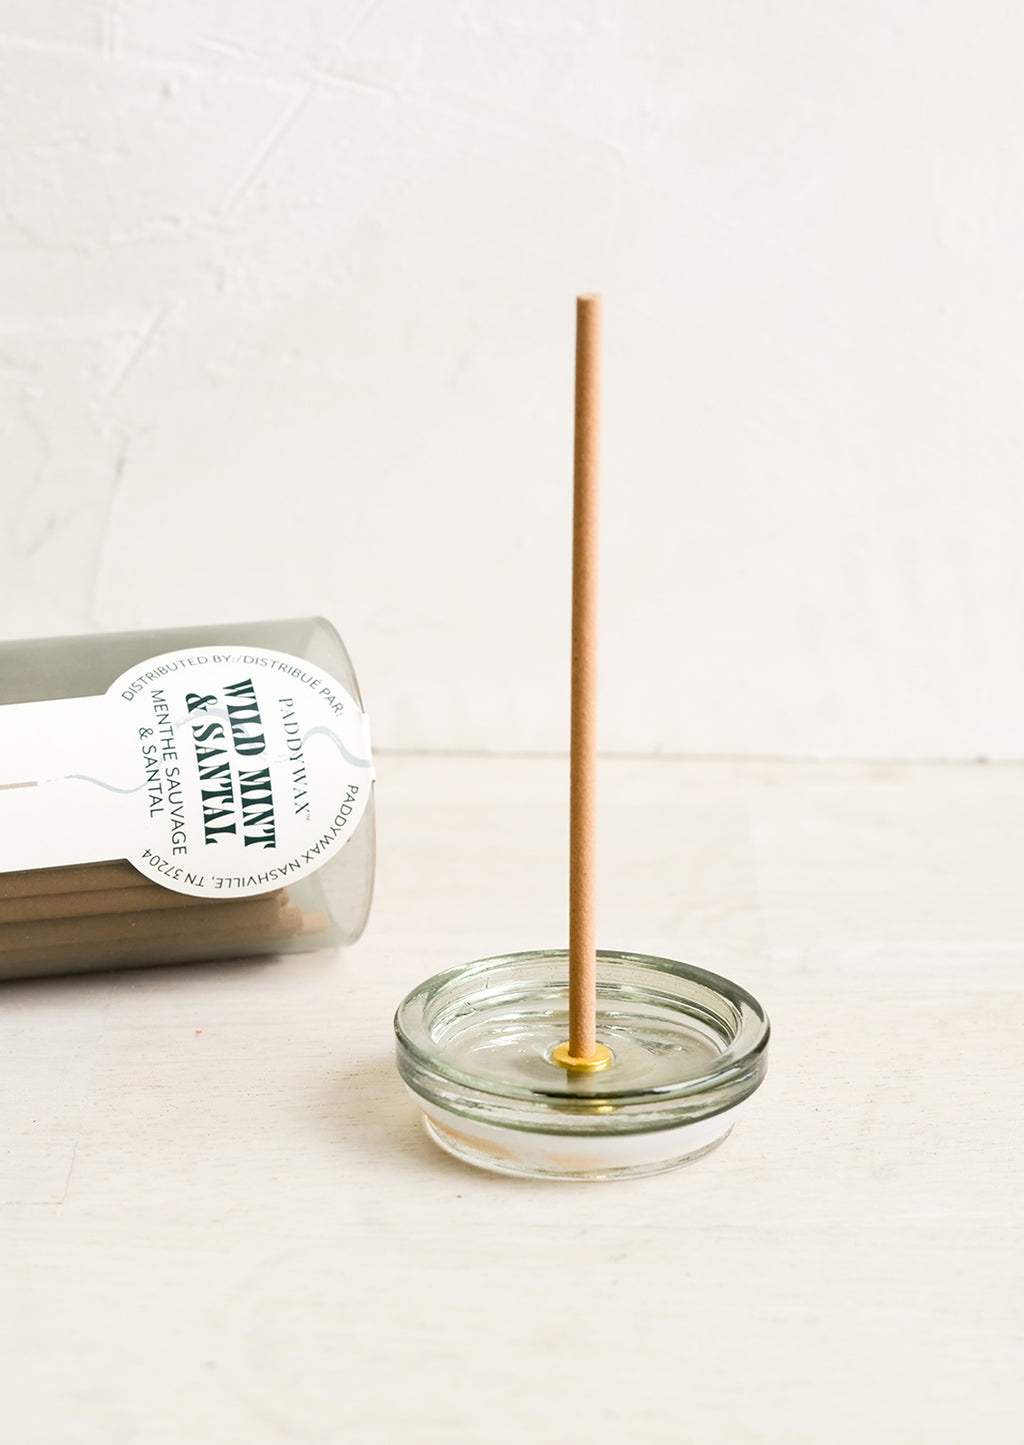 2: An incense jar with holder built into jar lid.